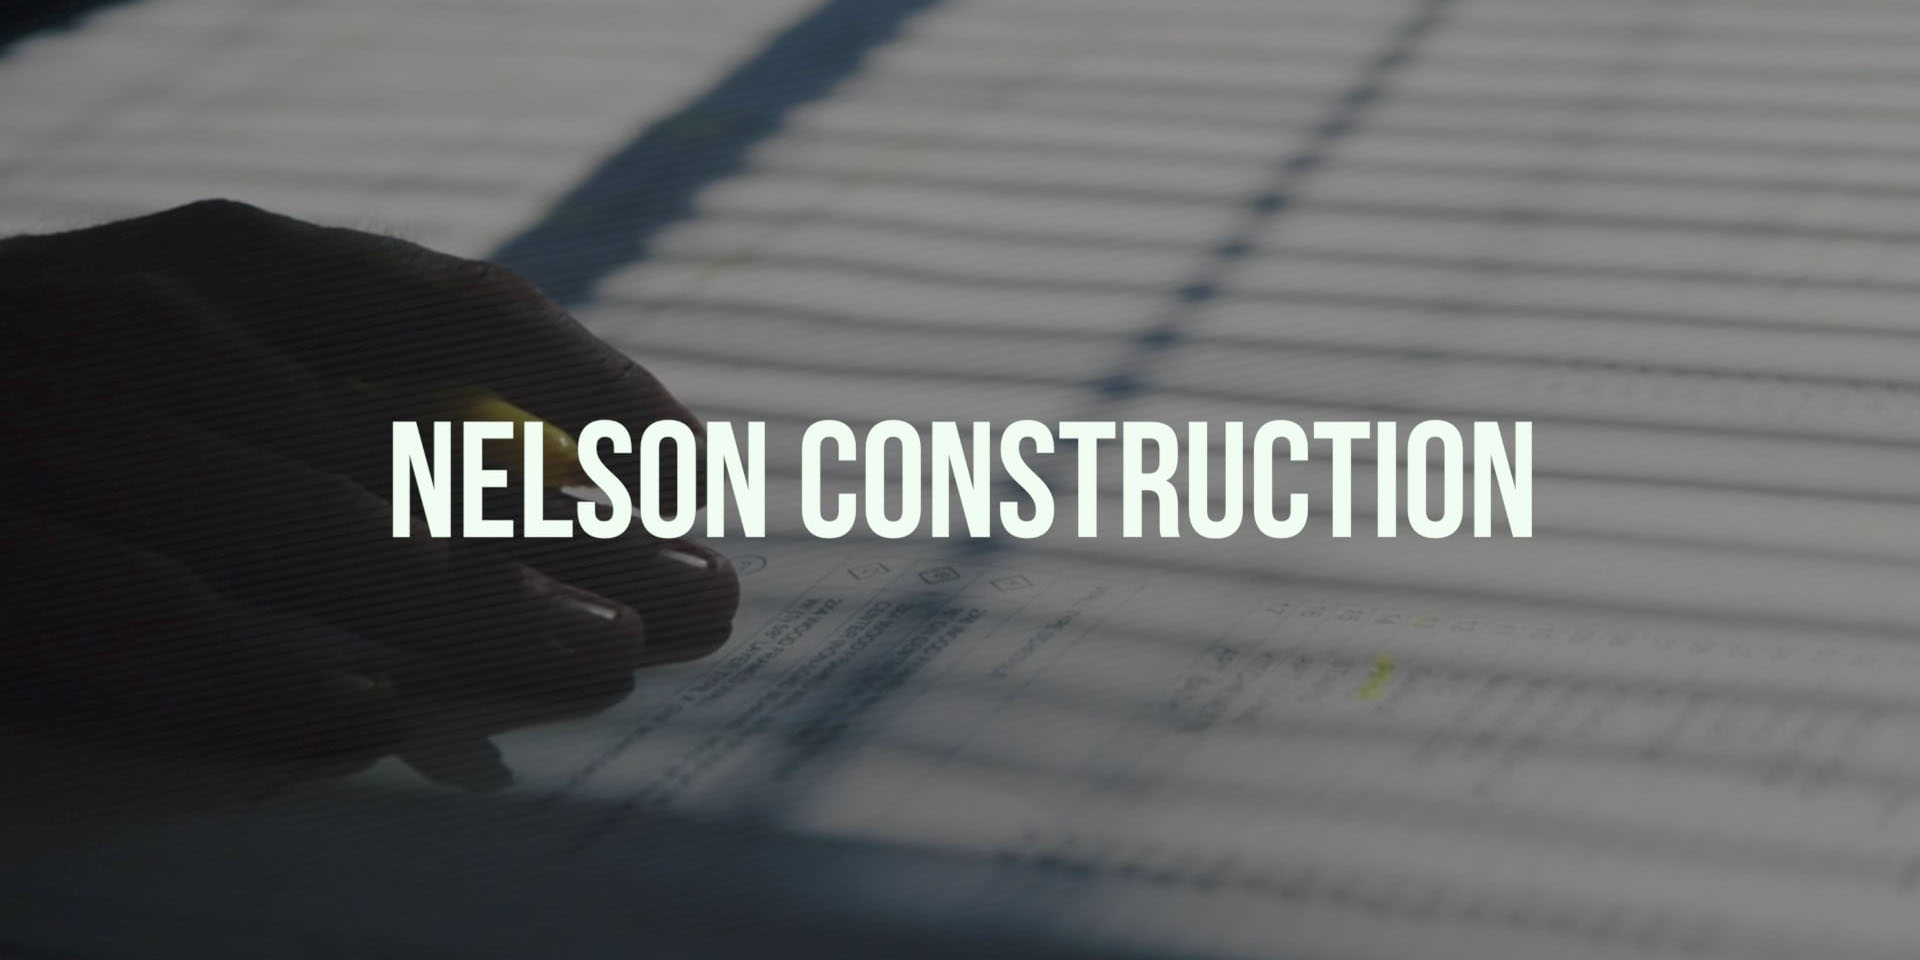 Nelson Construction